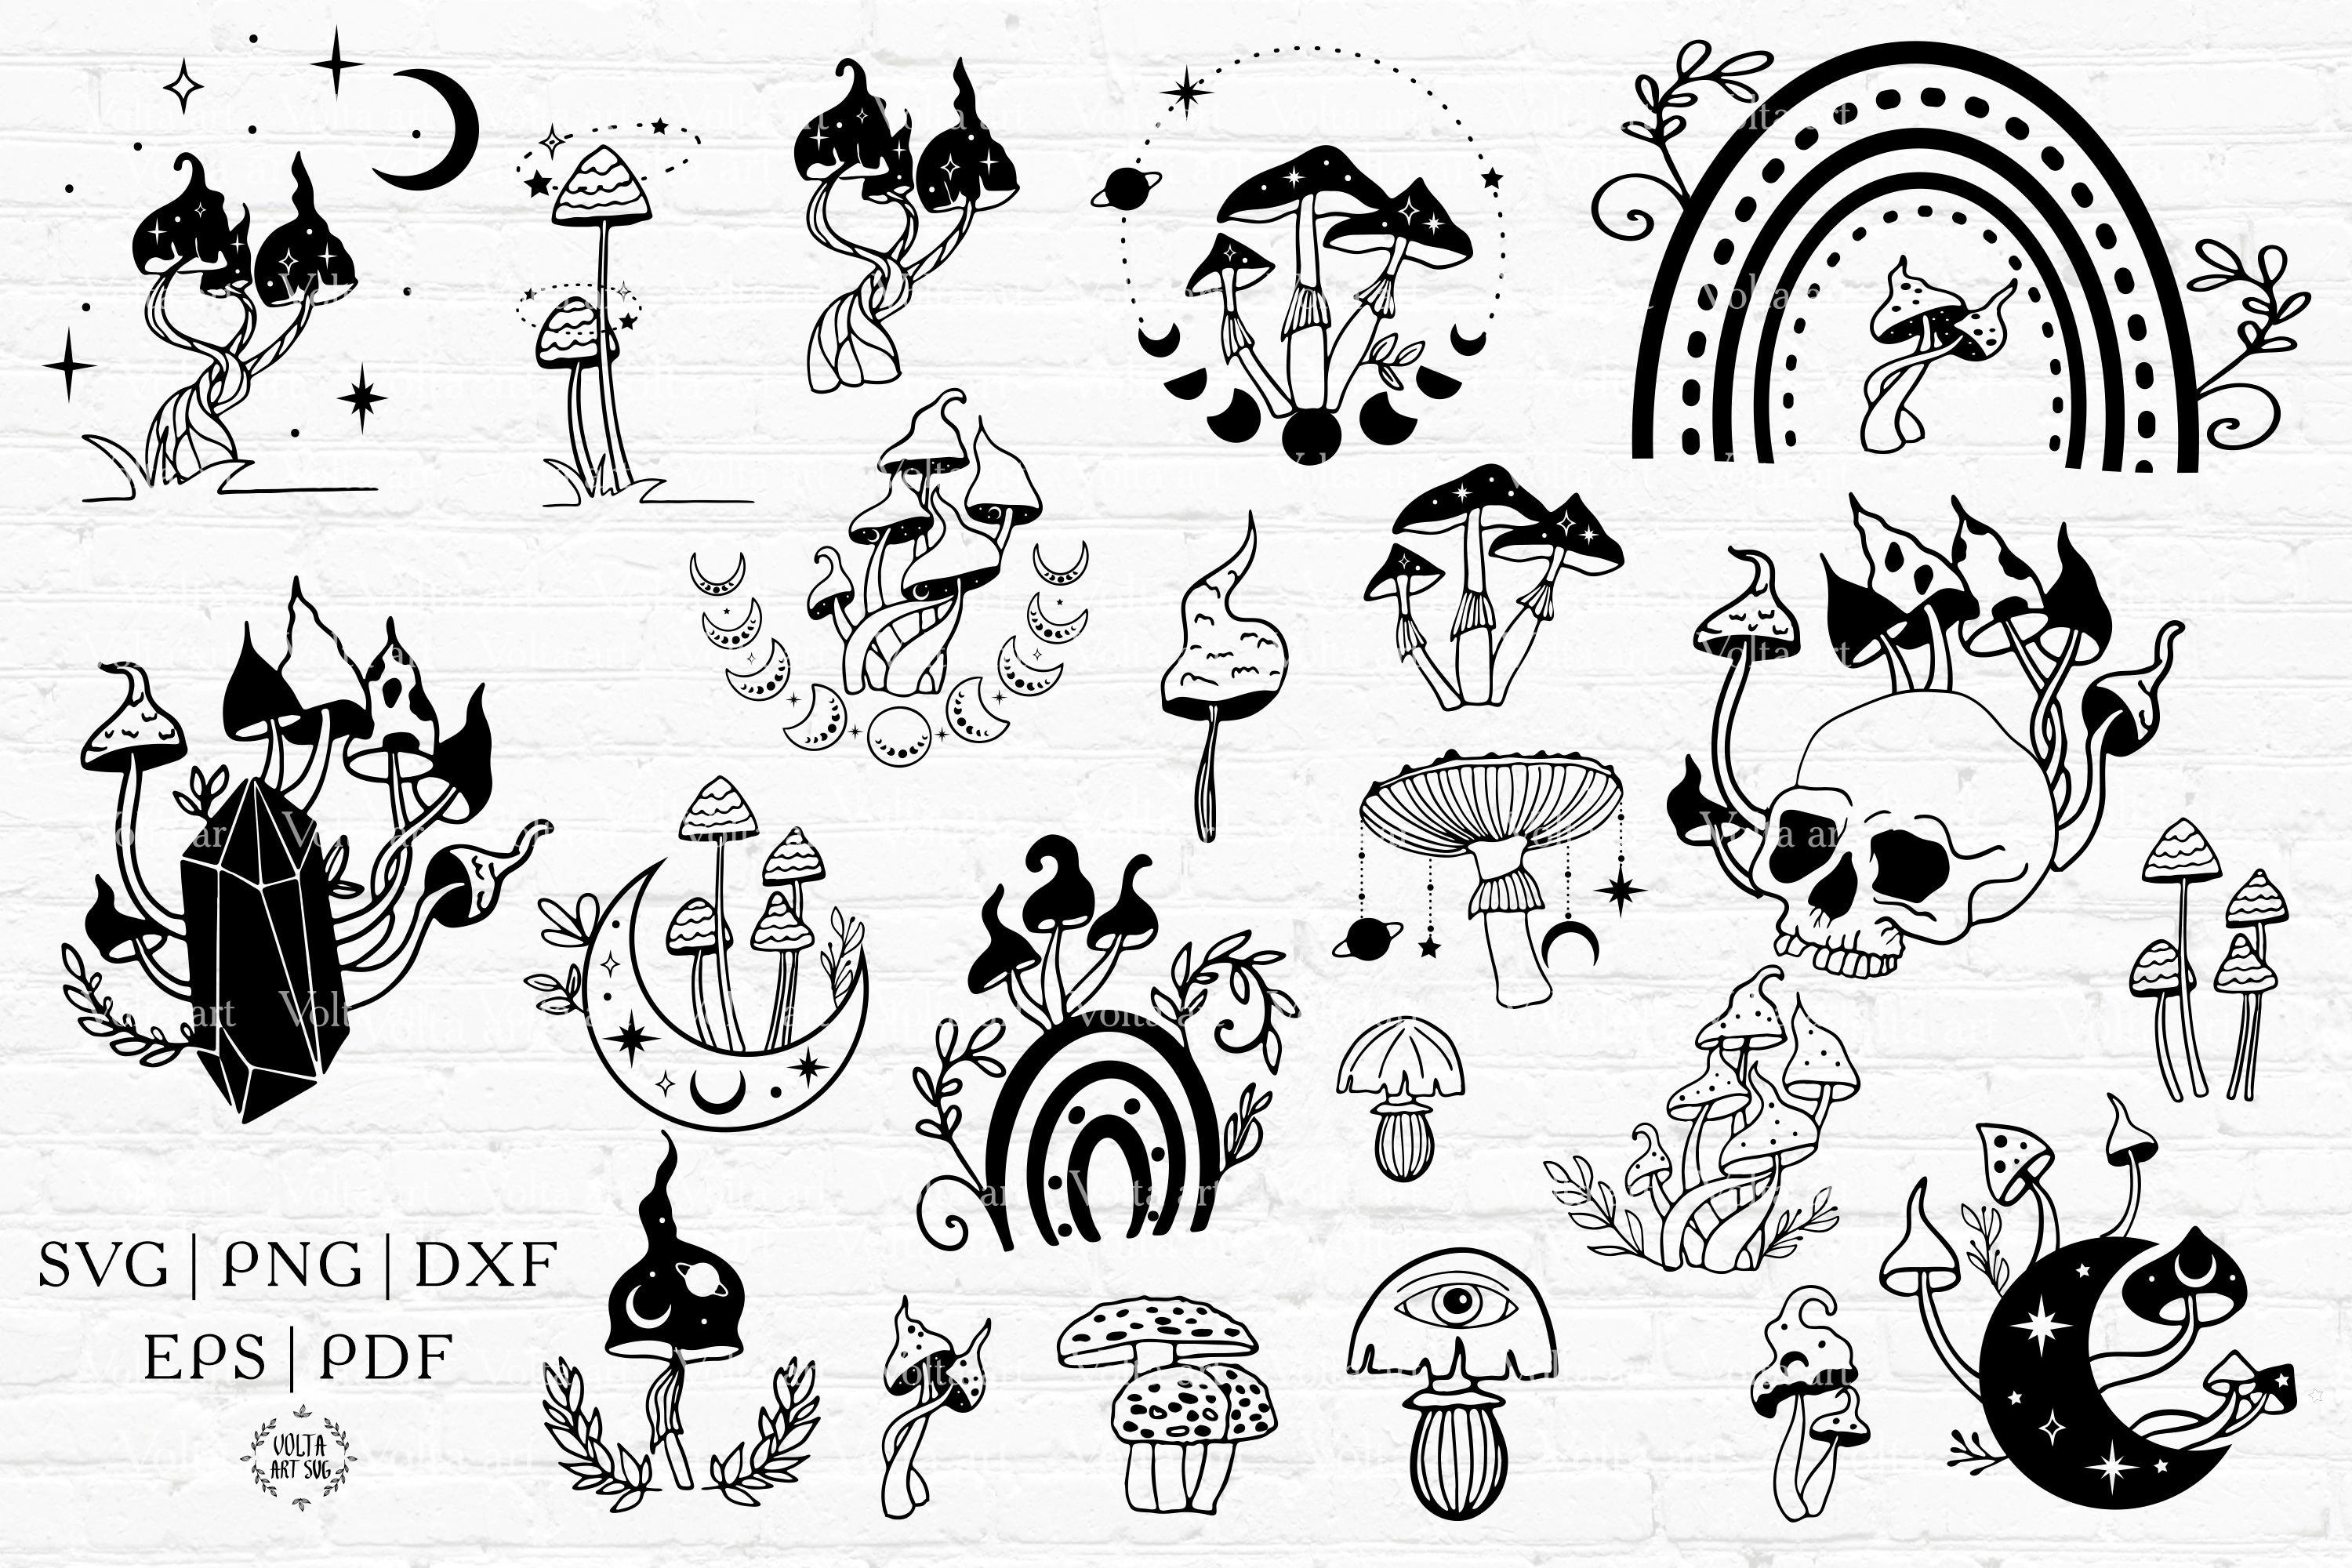 Diverse of elements for creating mushroom illustration.